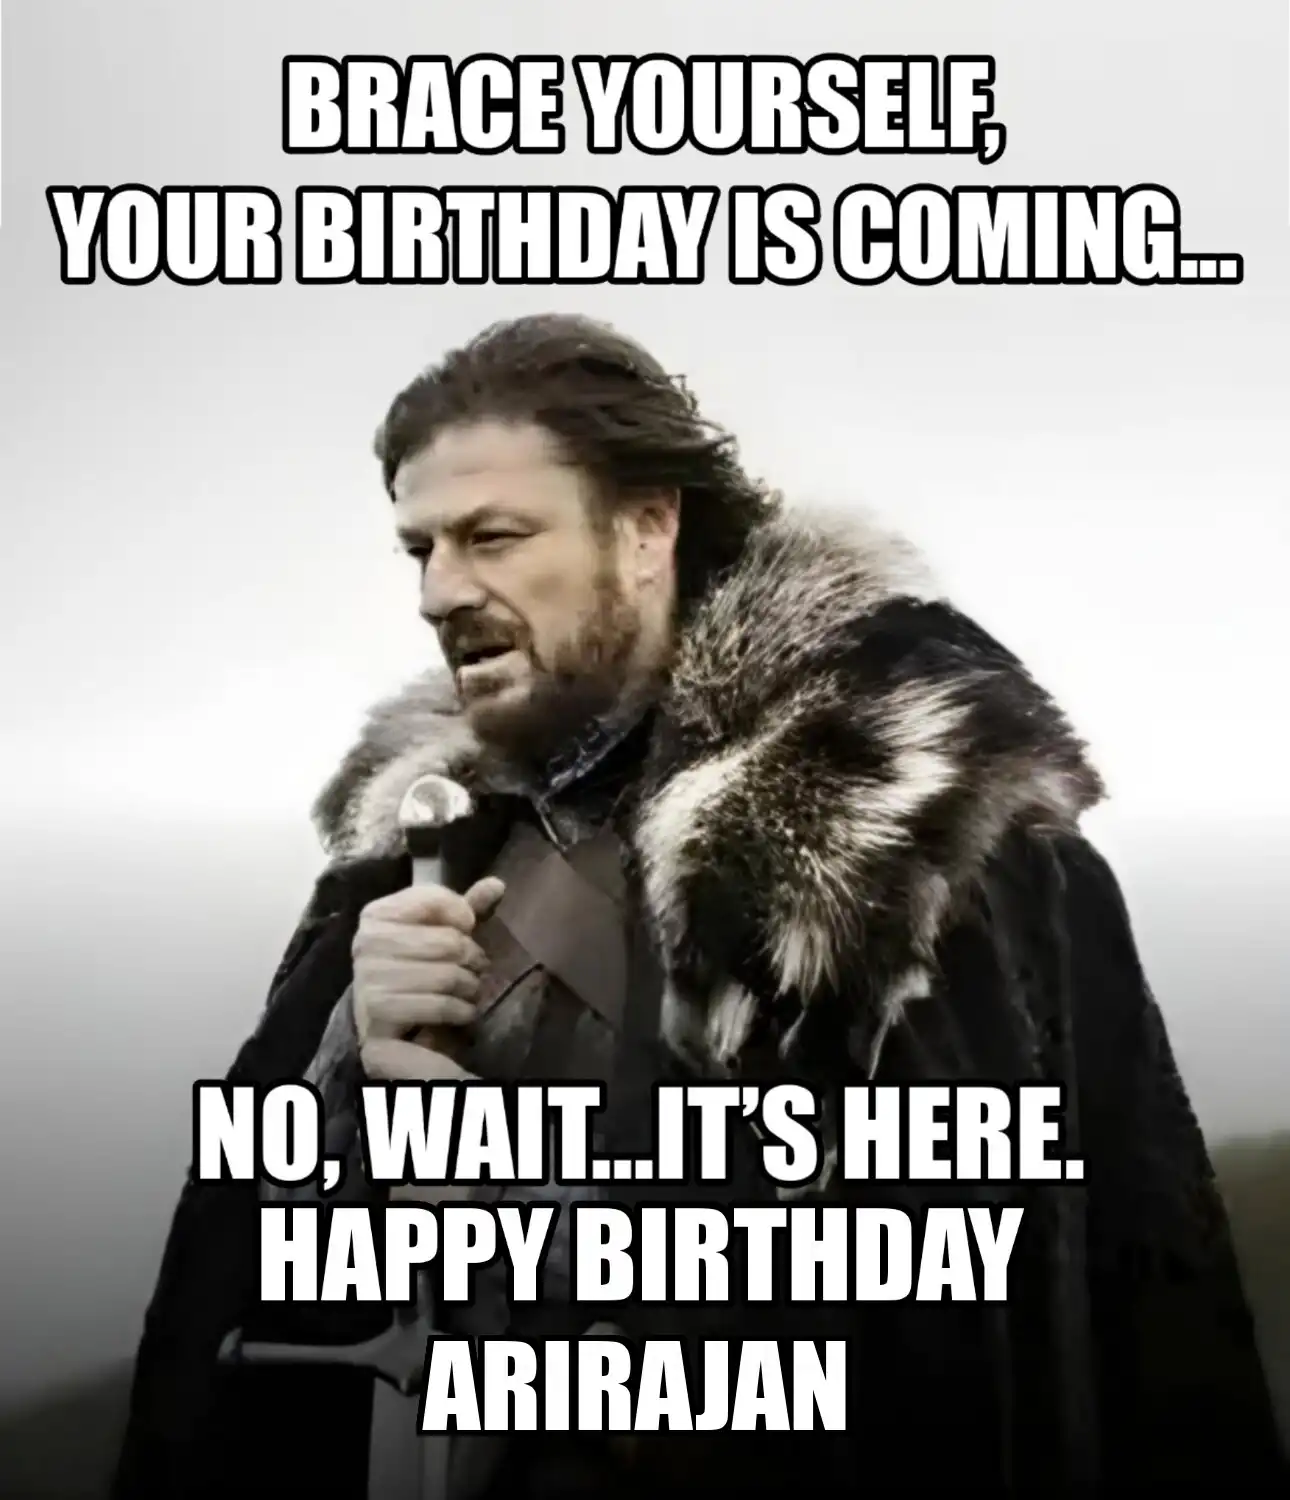 Happy Birthday Arirajan Brace Yourself Your Birthday Is Coming Meme